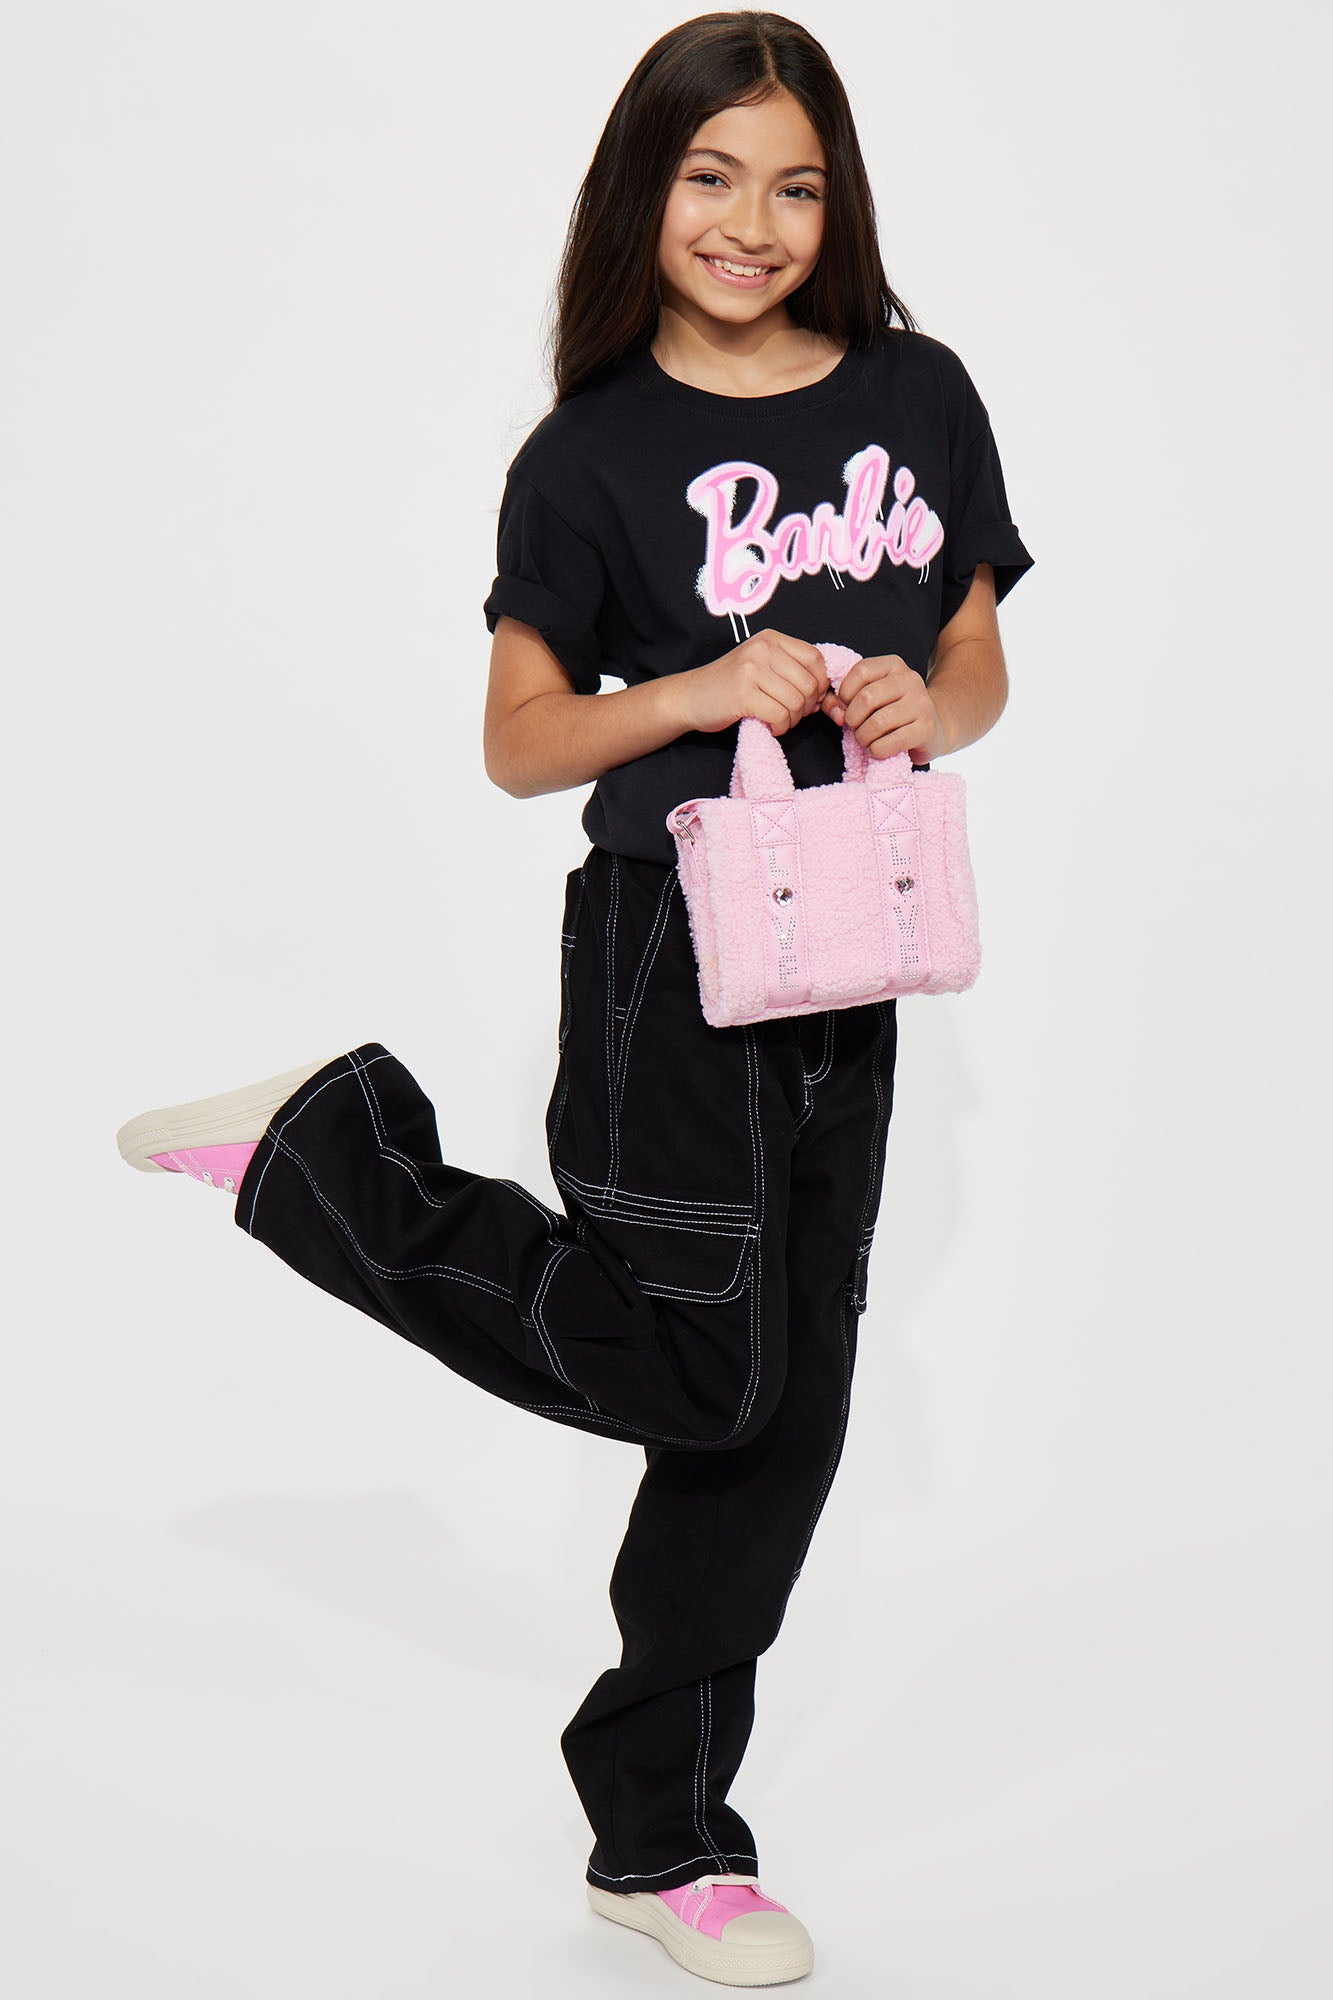 Kids' Mini Barbie Jersey Tee Shirt in Hot Pink Size 14/16 by Fashion Nova